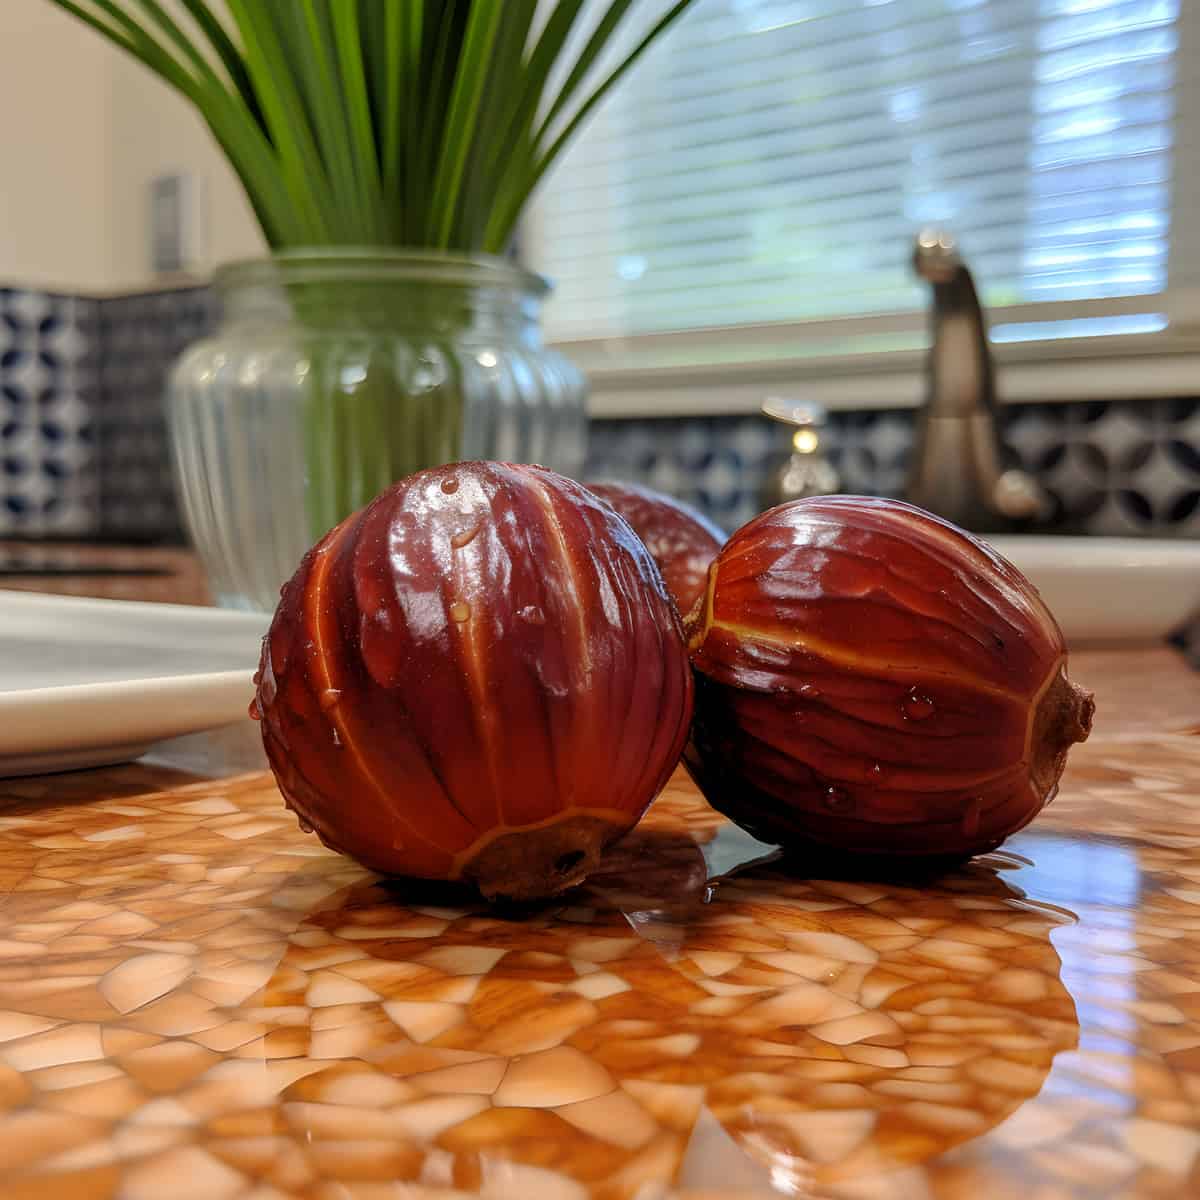 Moriche Palm Fruit on a kitchen counter